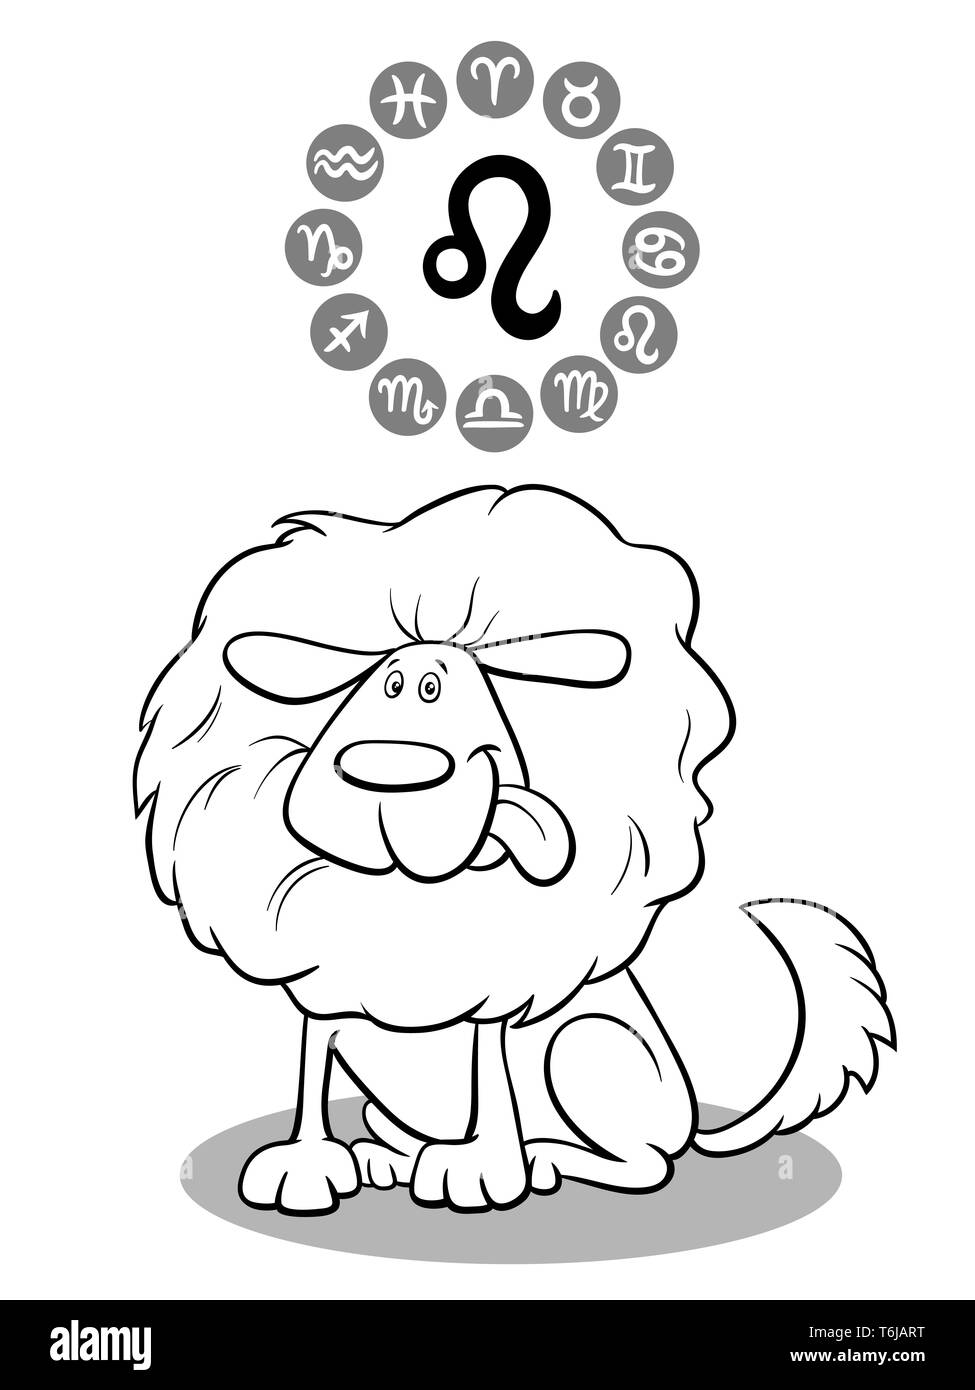 cartoon dog as Leo Zodiac sign Stock Photo